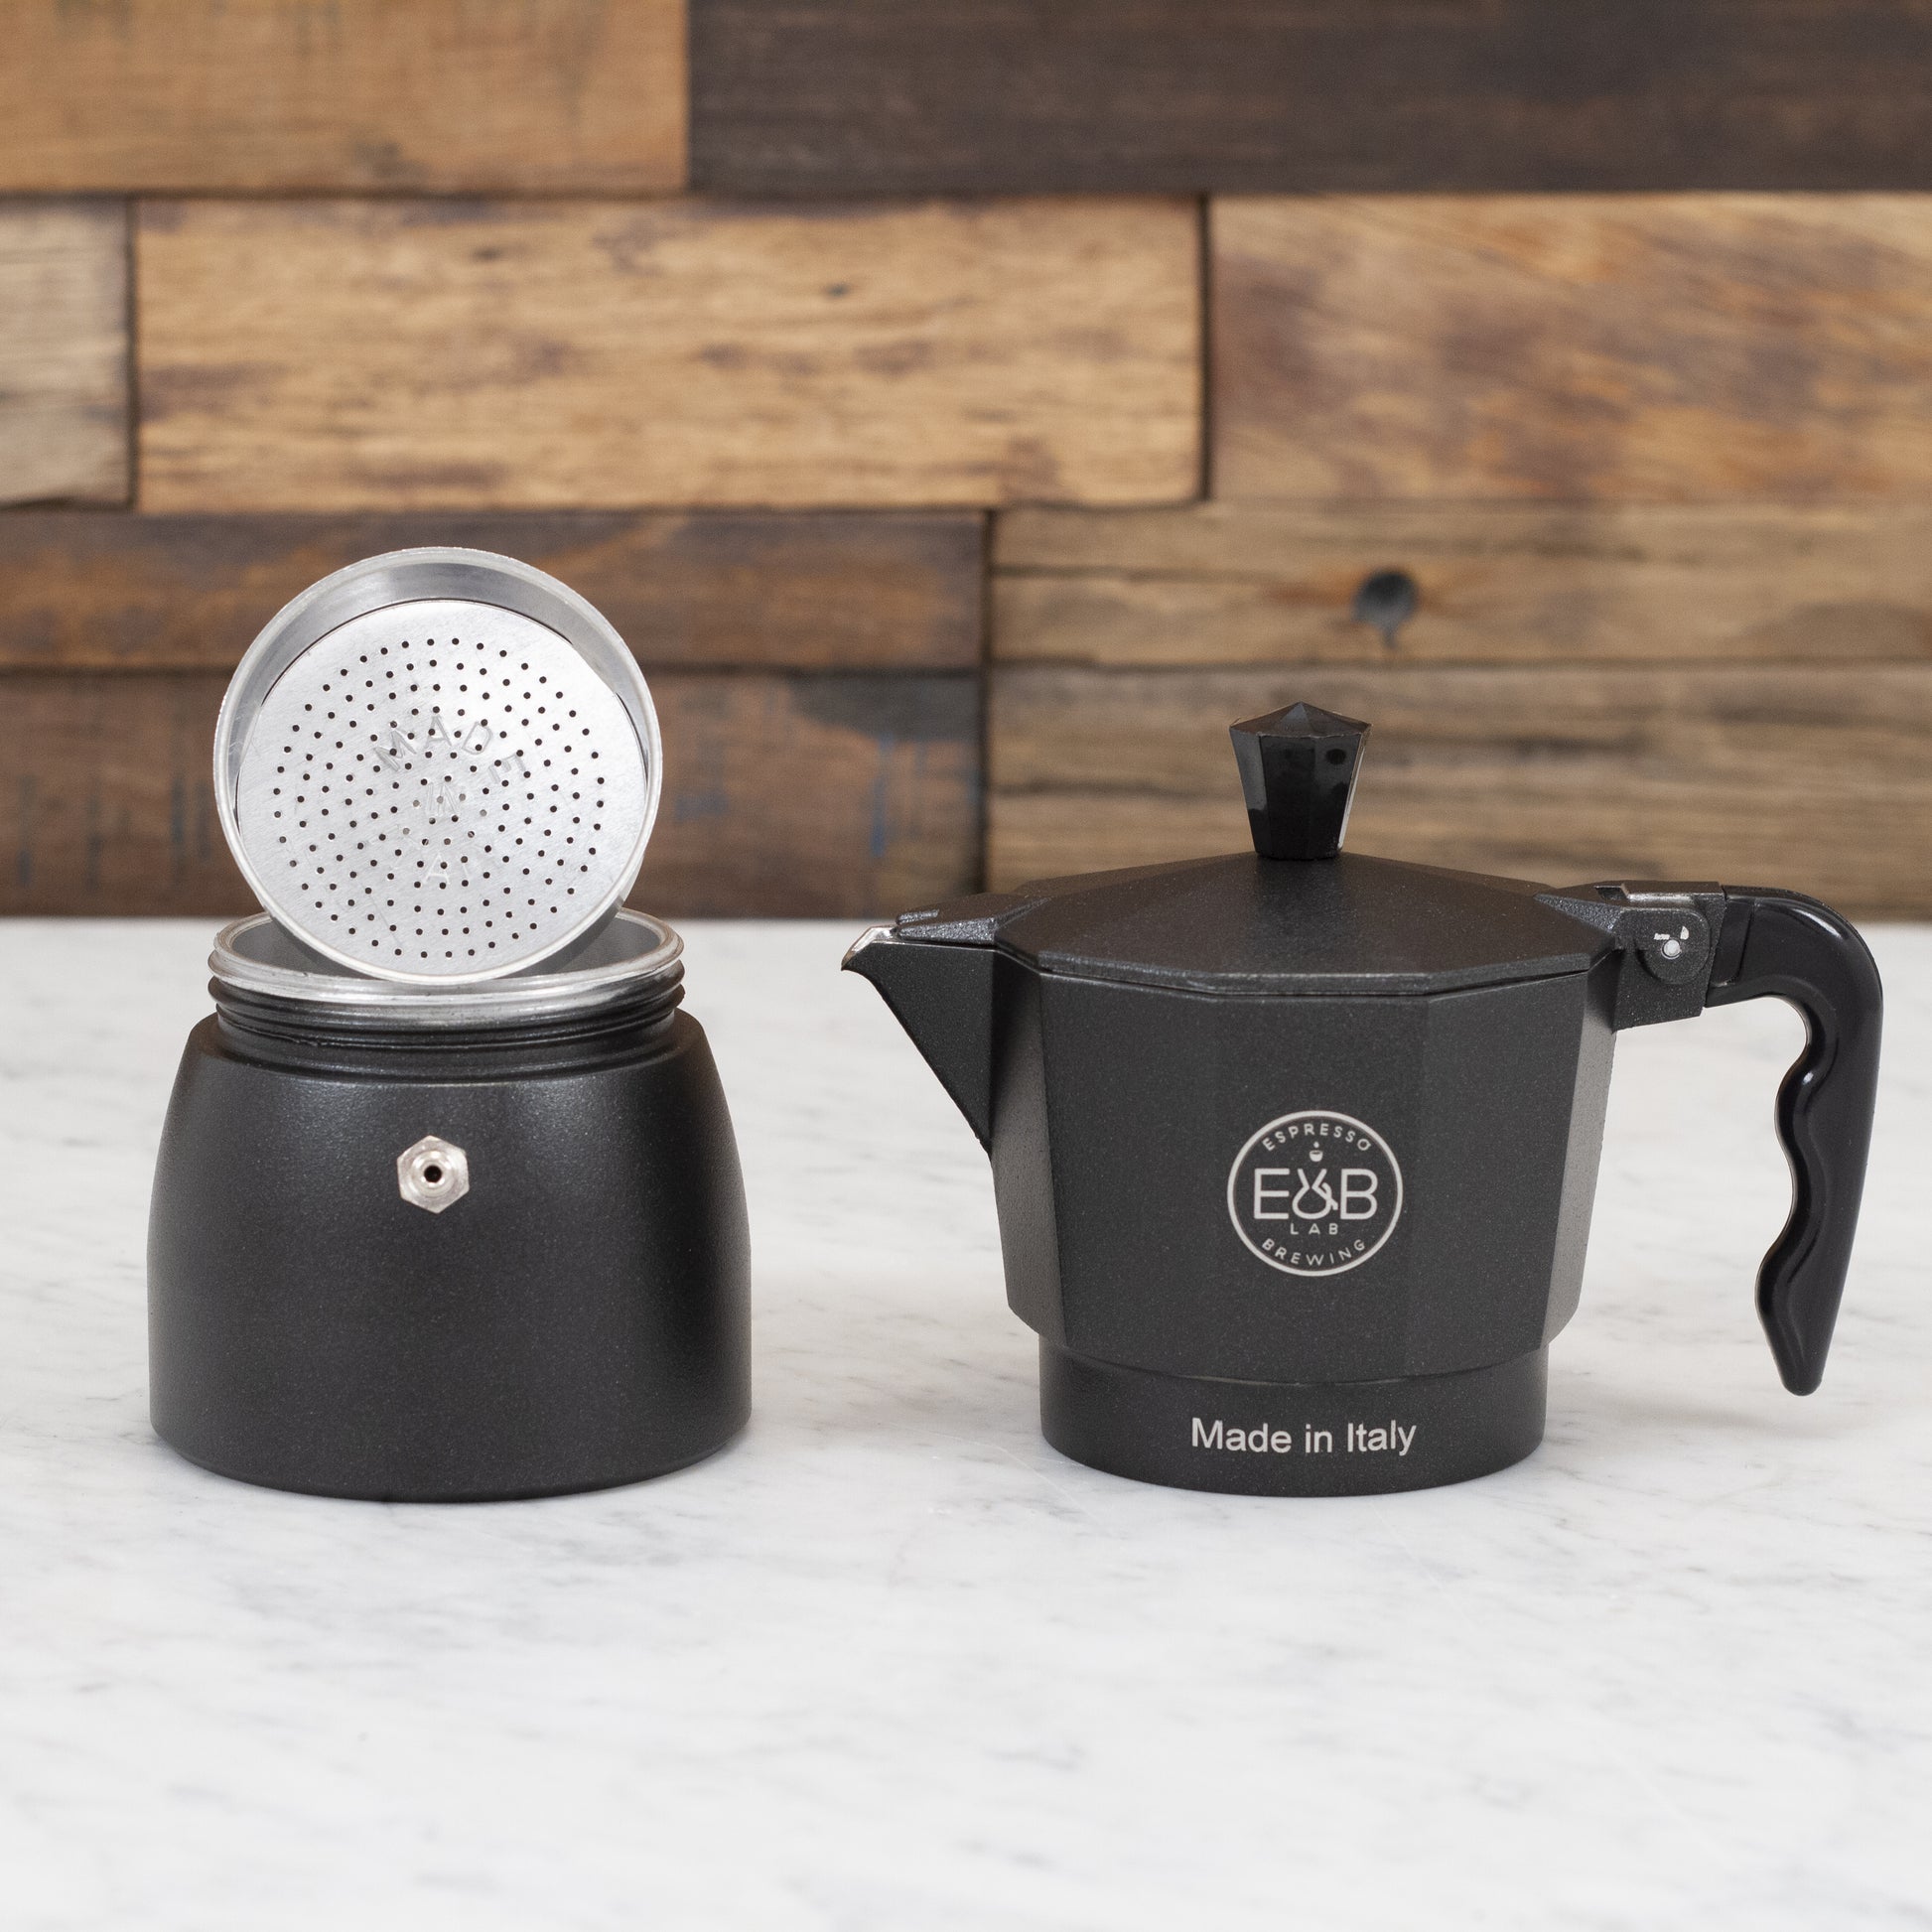 3 Cup Uniware Professional Electric Espresso/Moka Coffee Maker